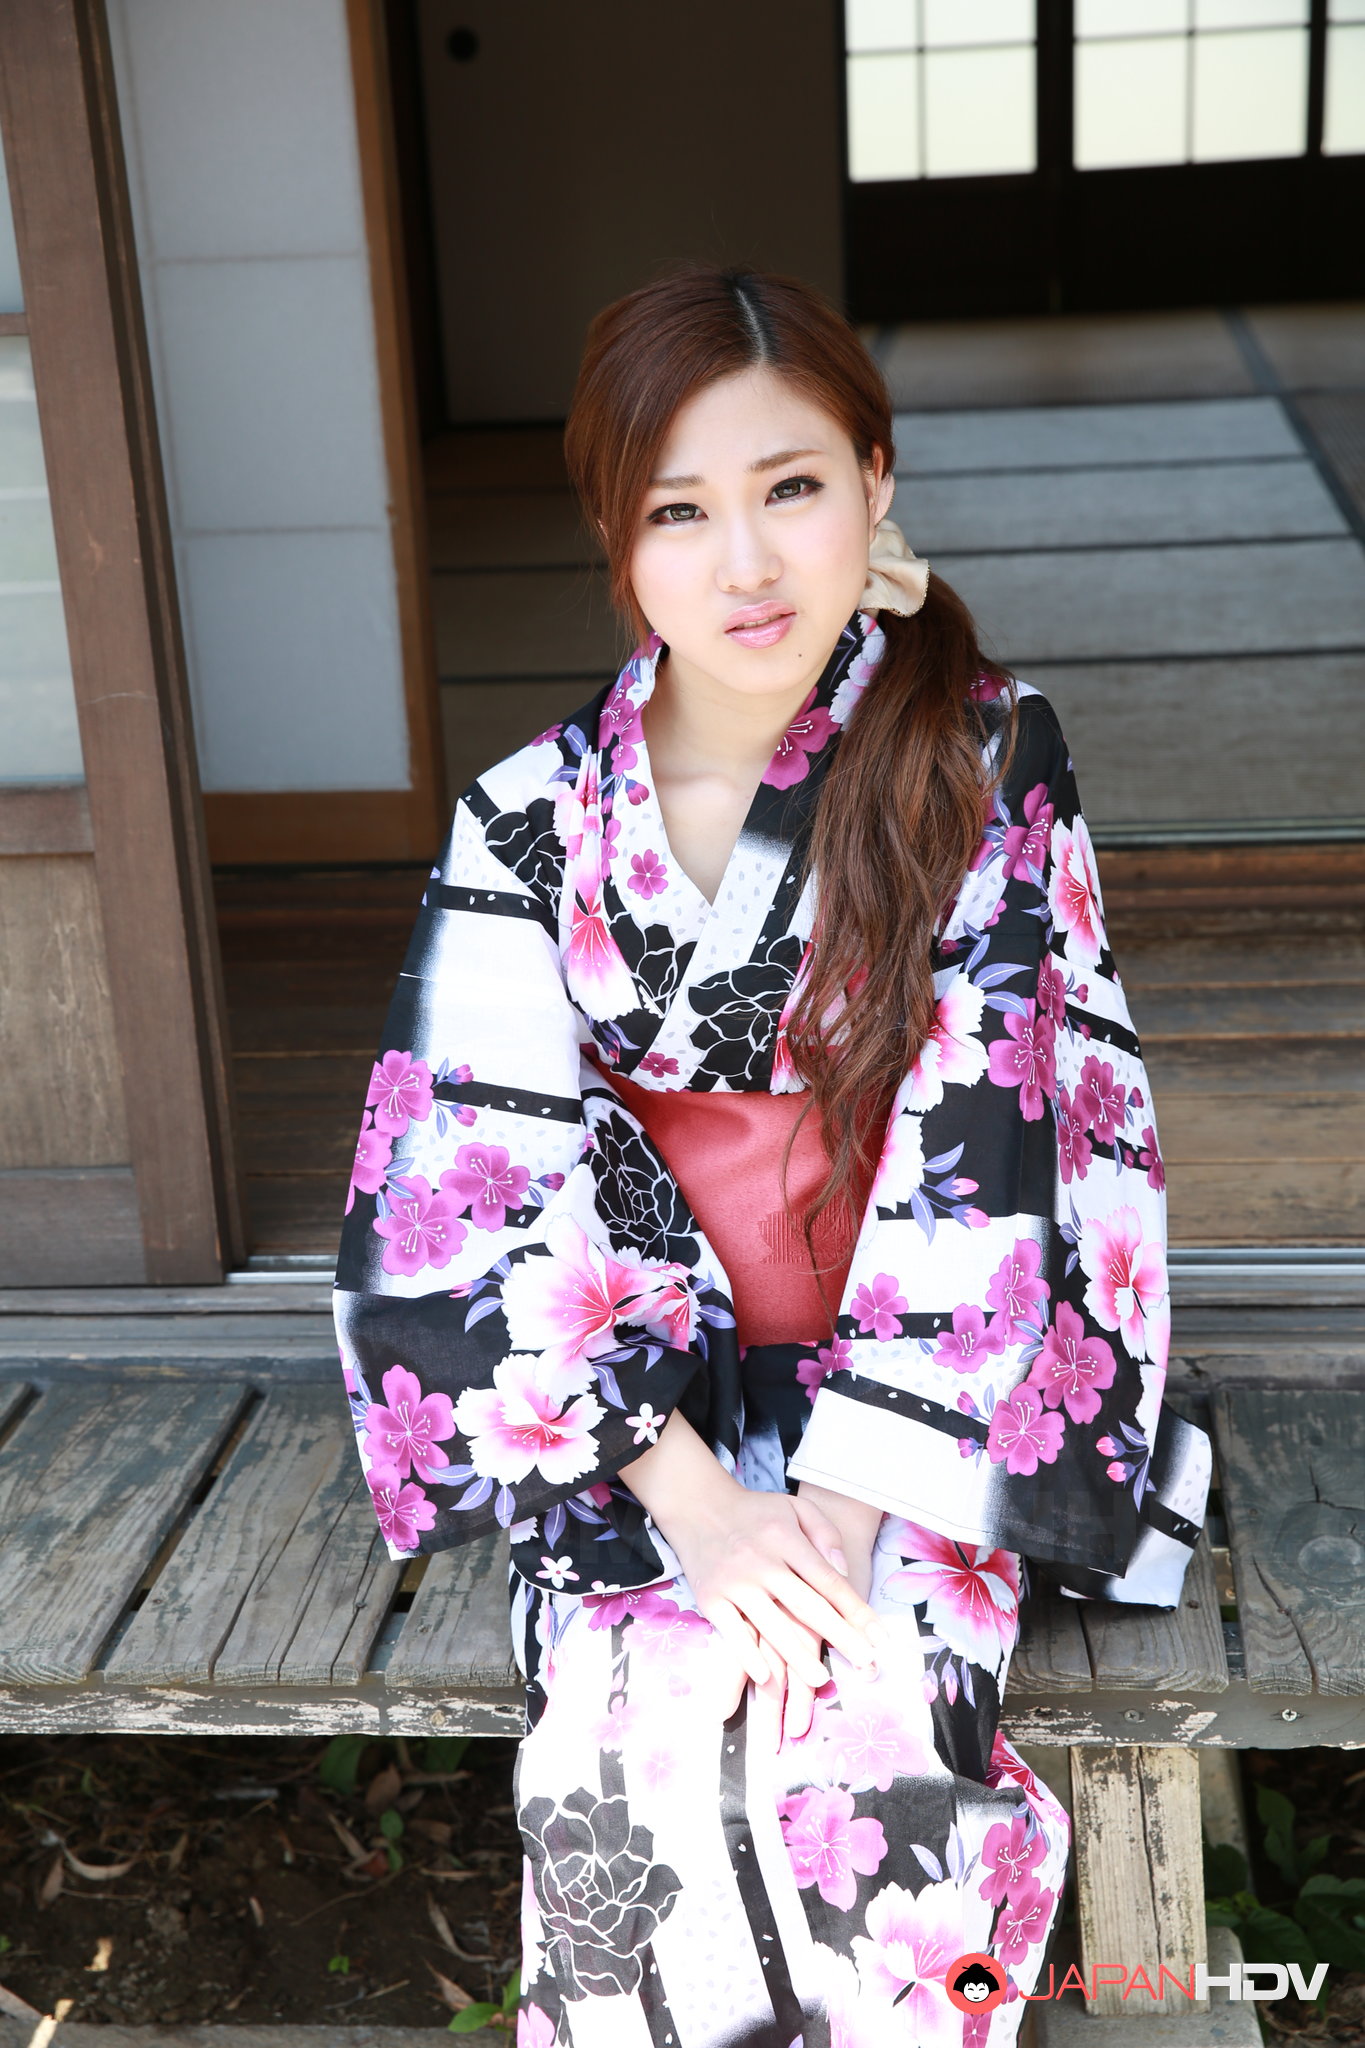 japanhdv_Kimono_Lady_Maki_Horiguchi_scene2_gravure_001.jpg. 下 一 篇 文 章. 回 到 ...